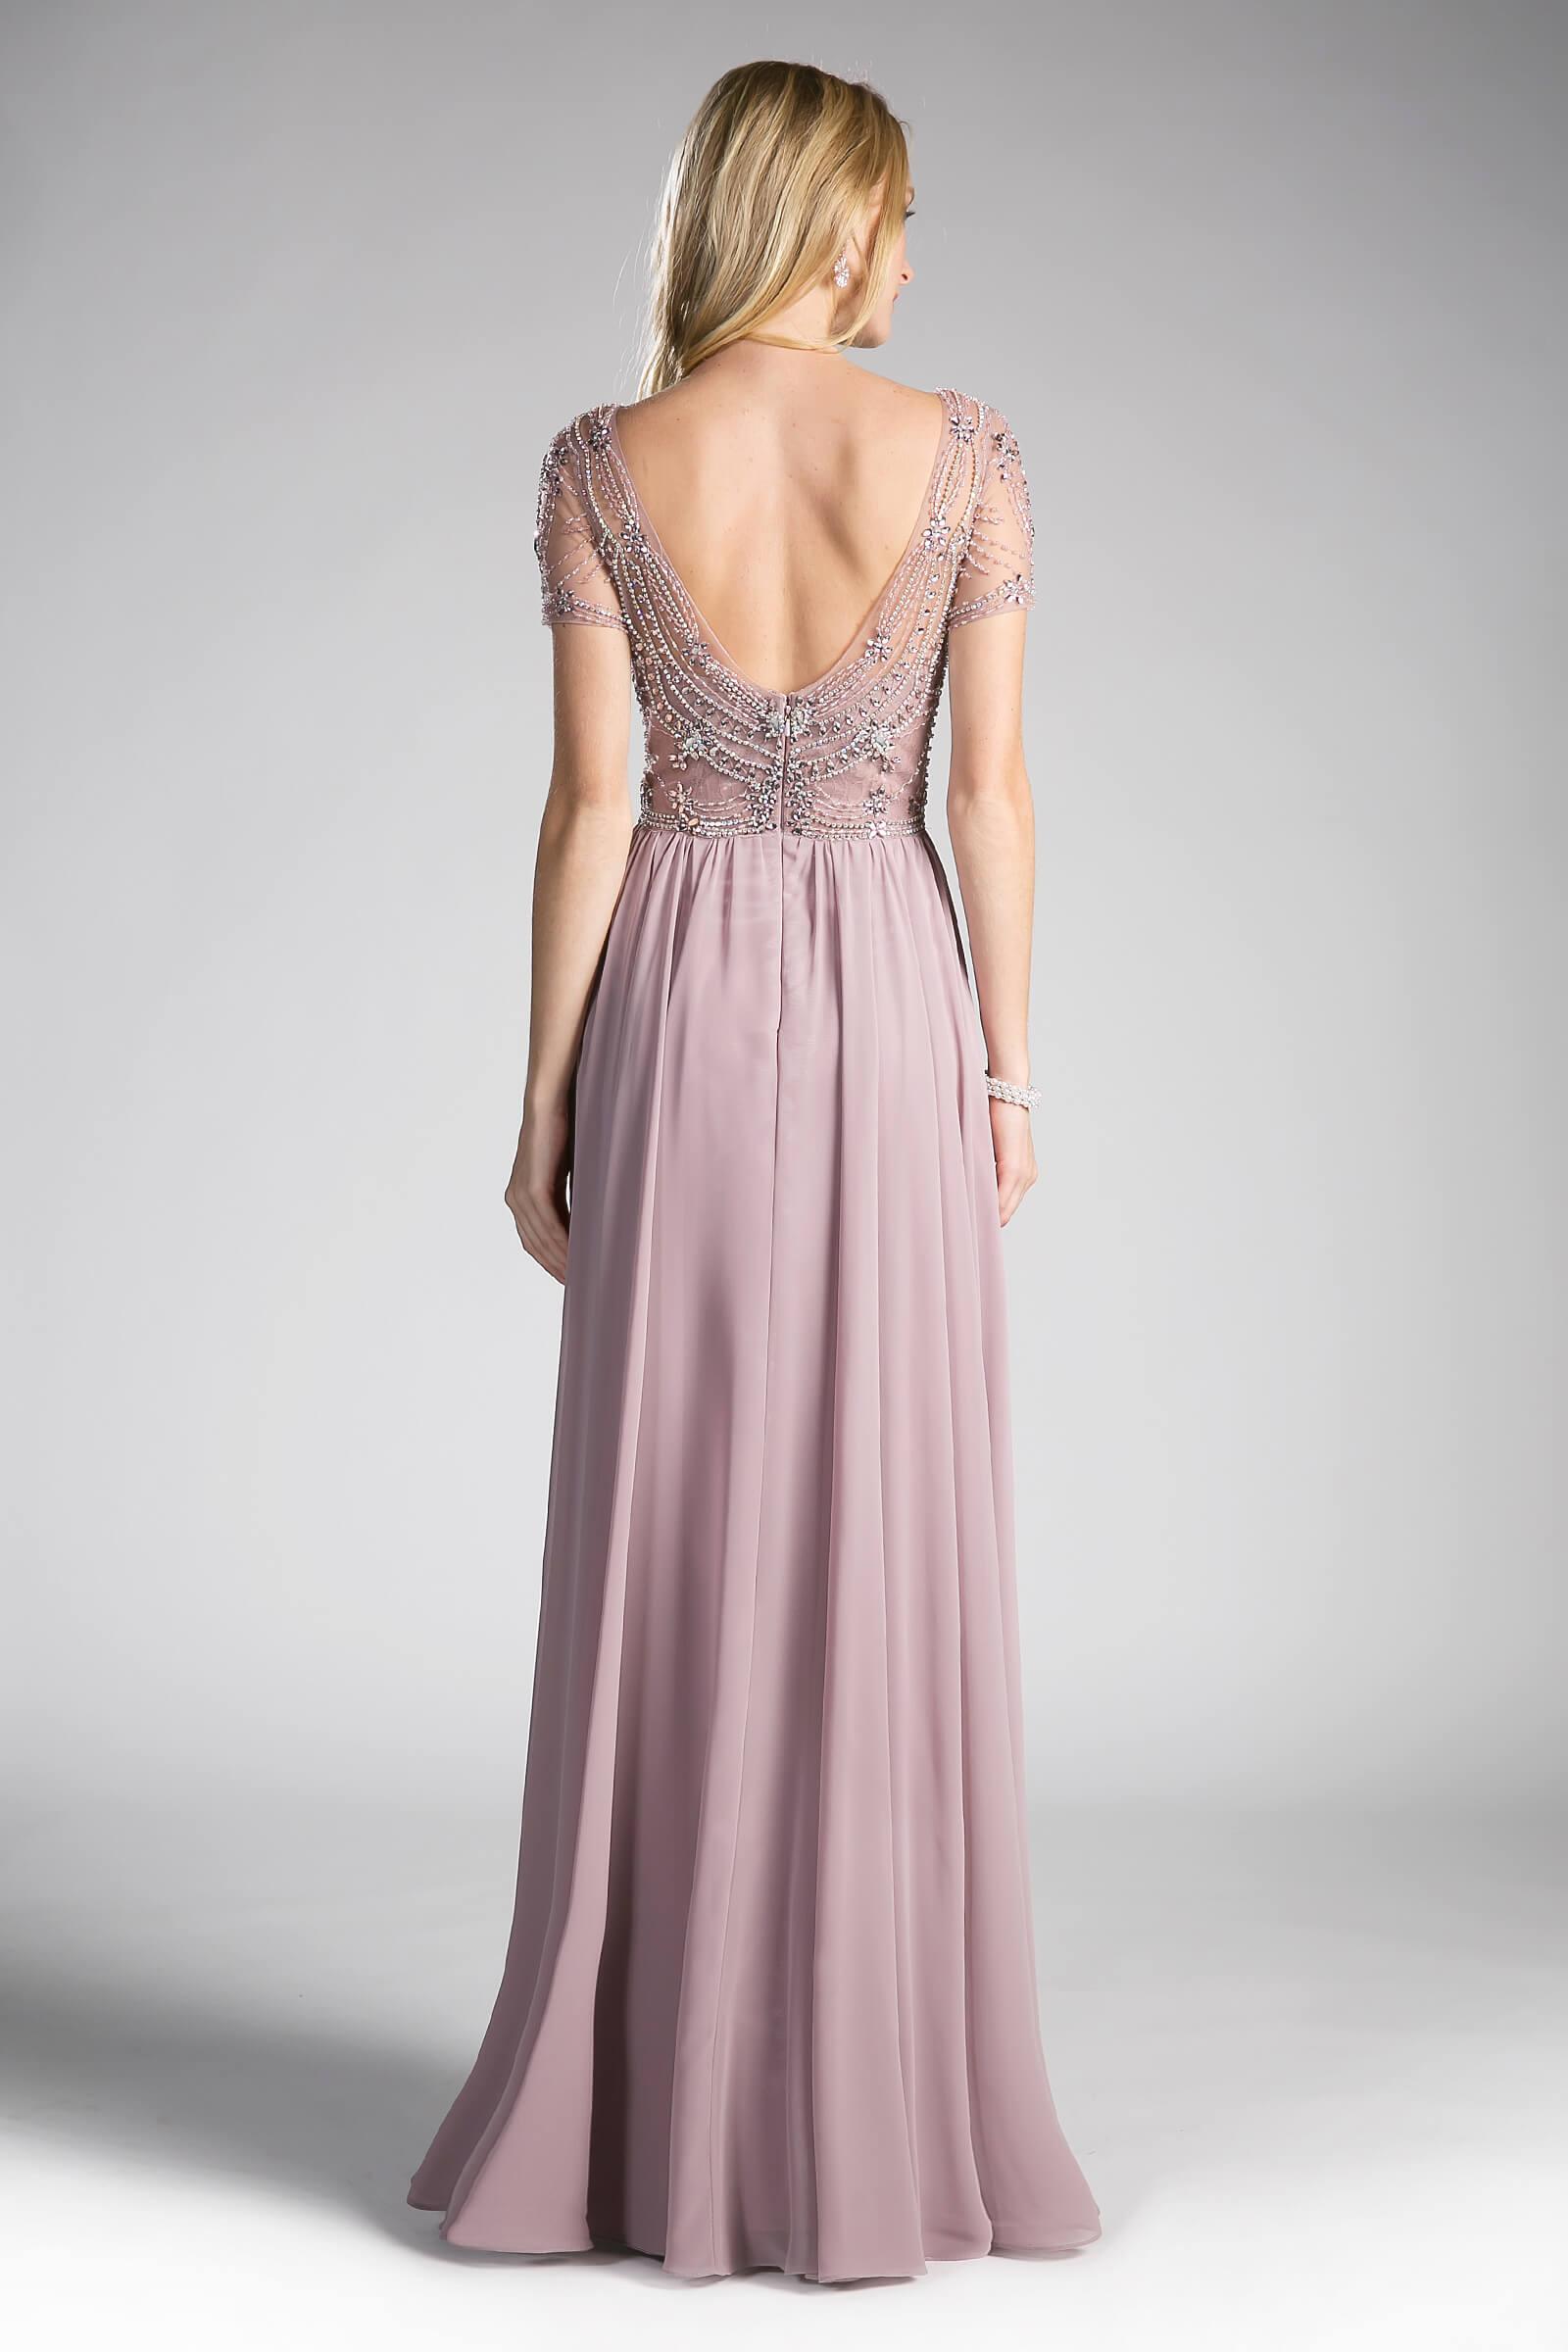 Long Dress Formal Evening Gown - The Dress Outlet Cinderella Divine